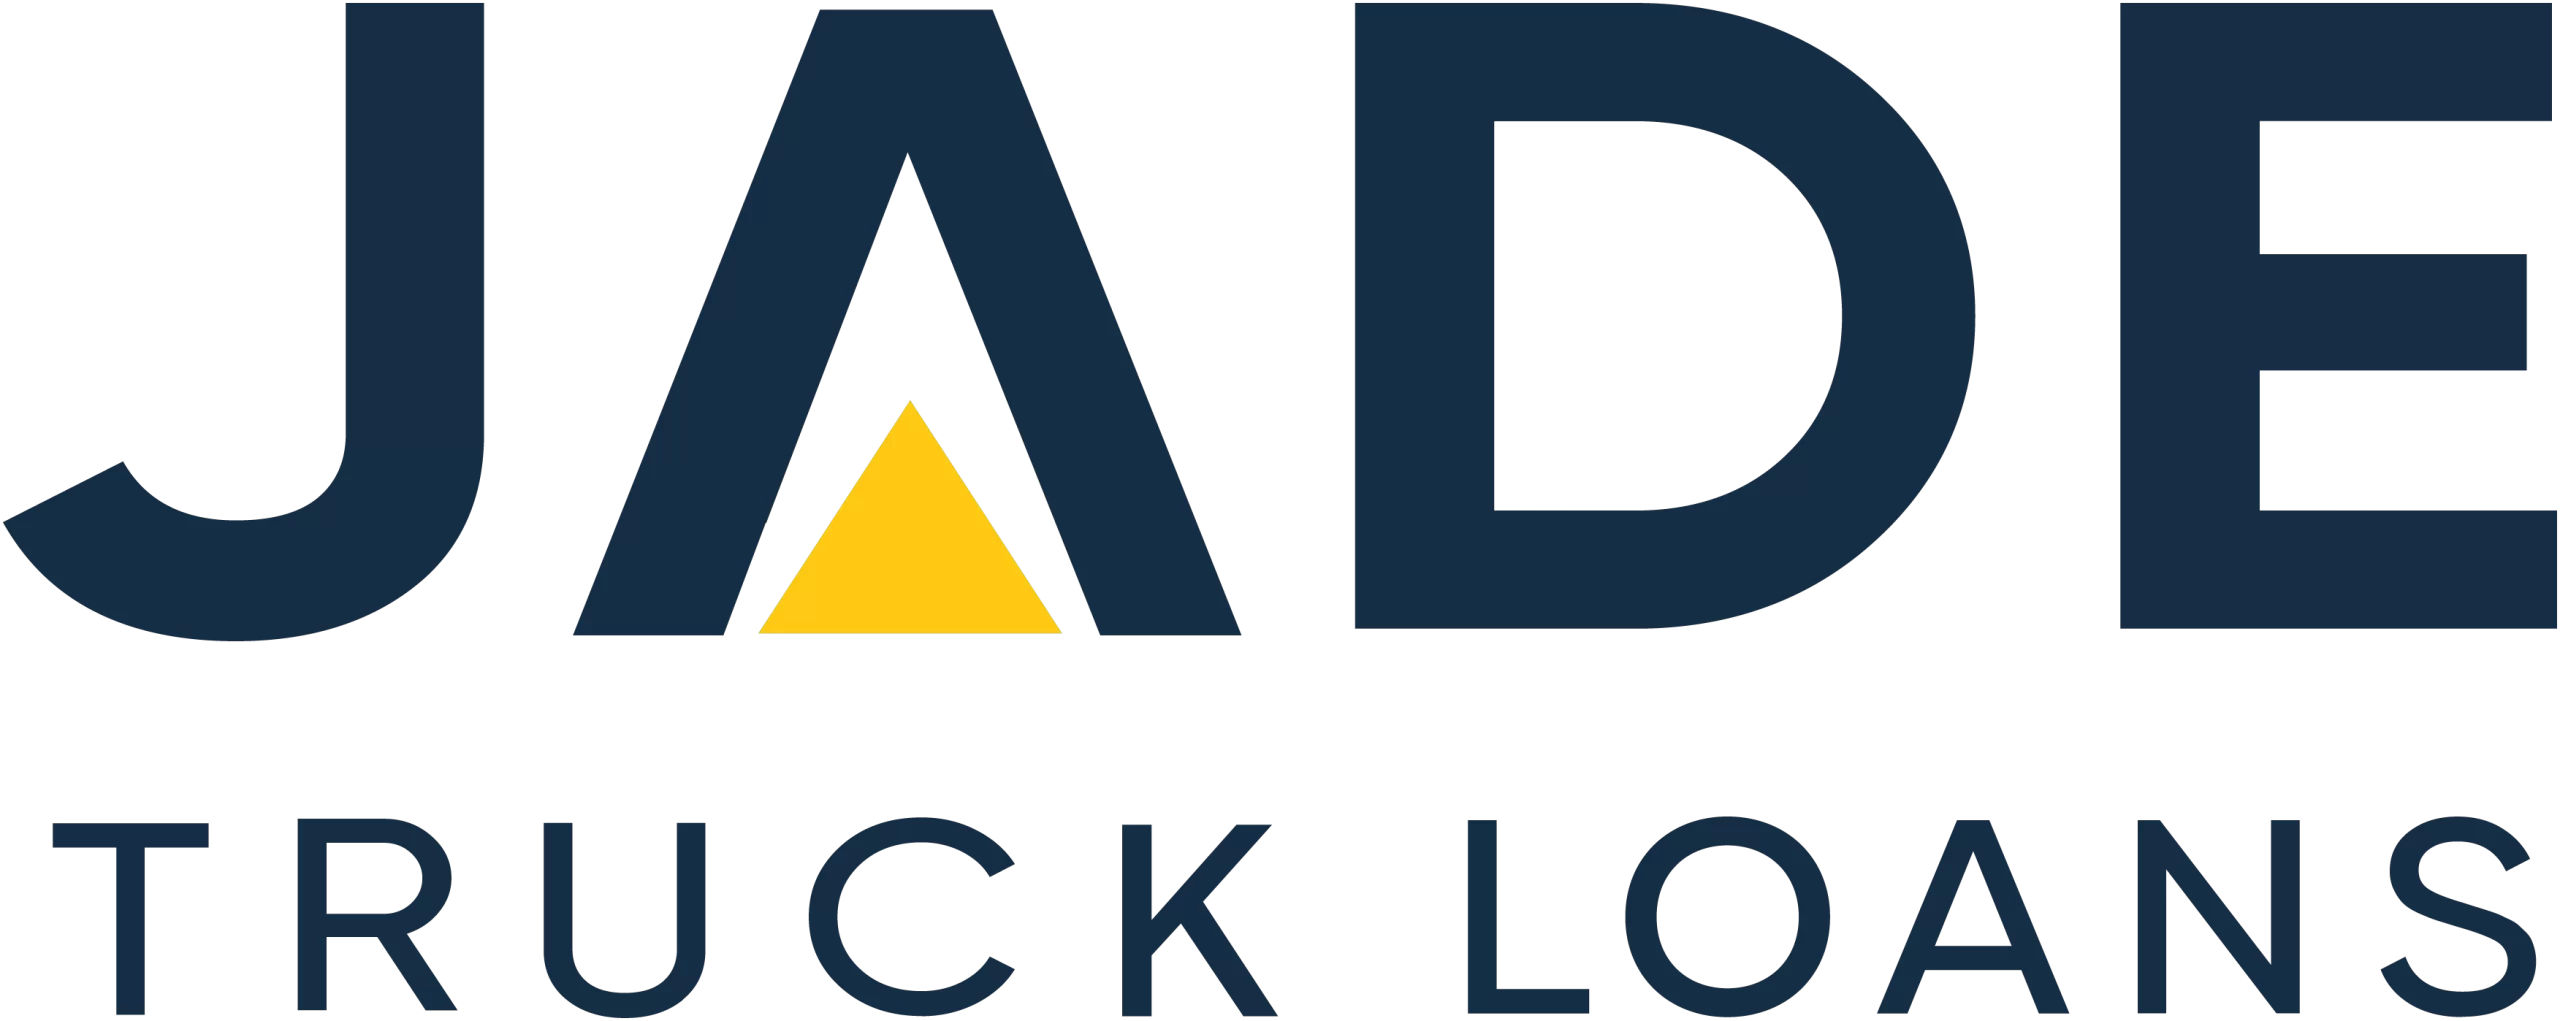 Jade Truck Loans Logo